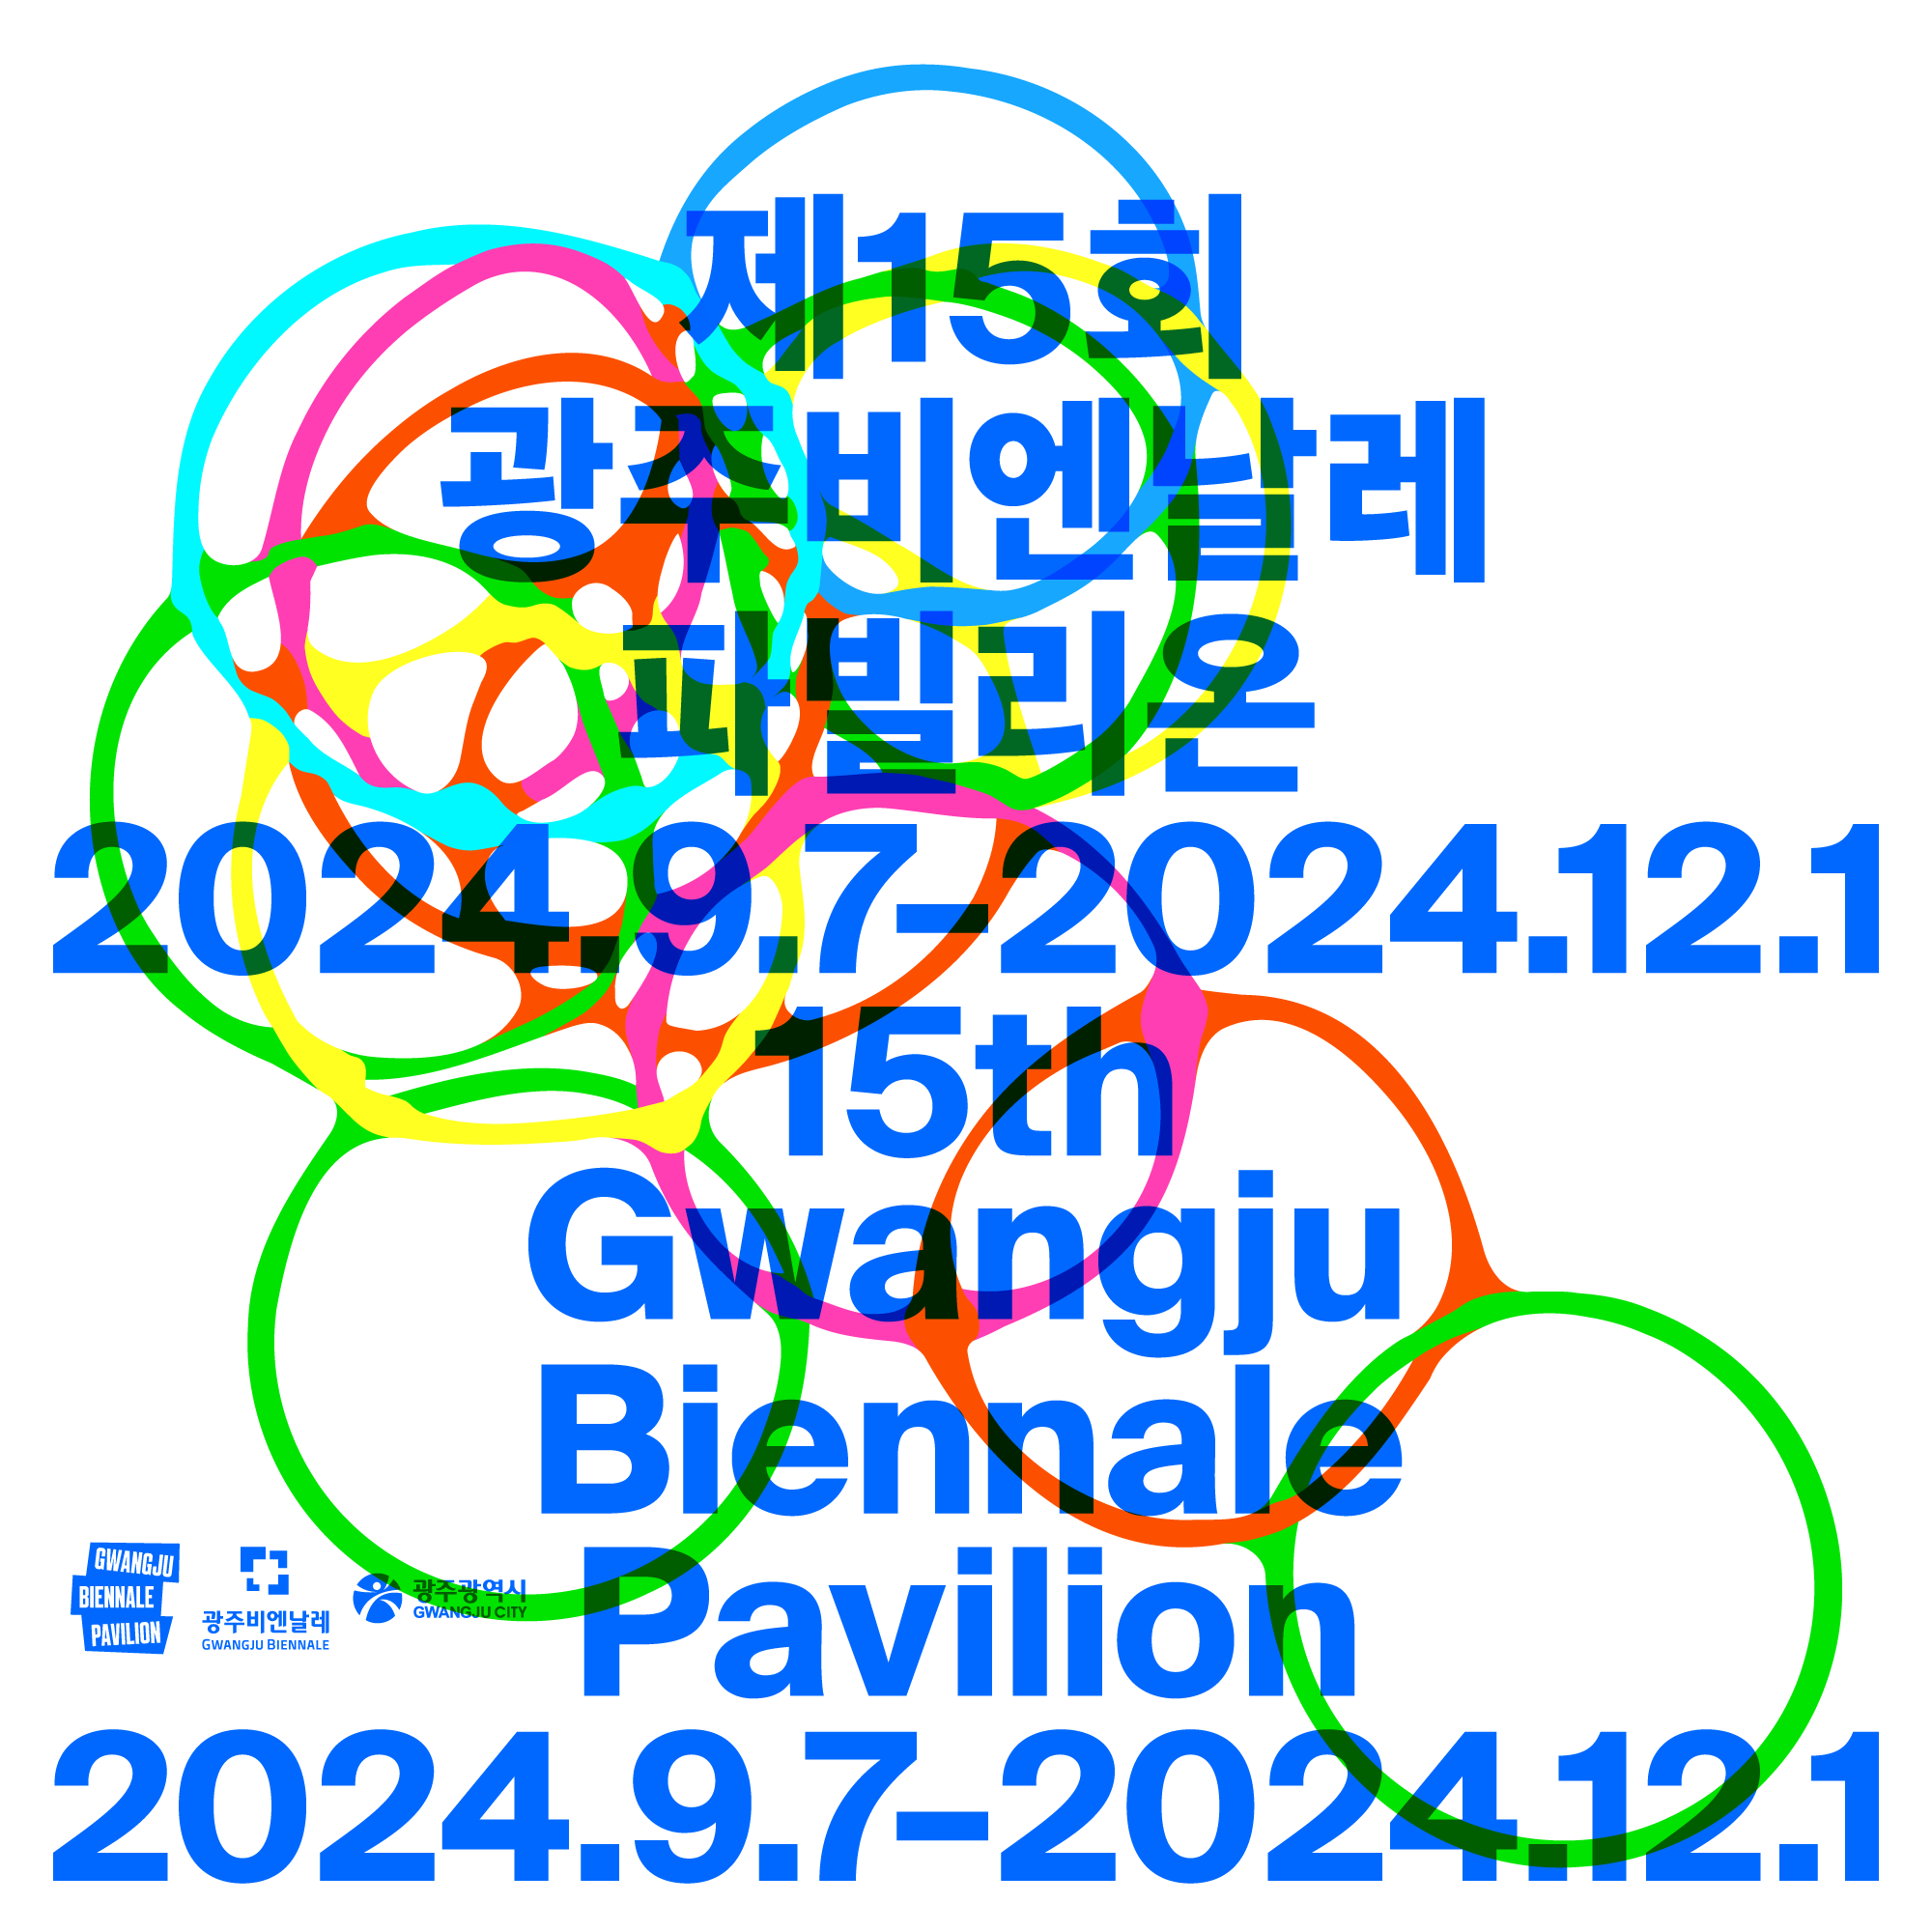 Gwangju Biennale Pavilion